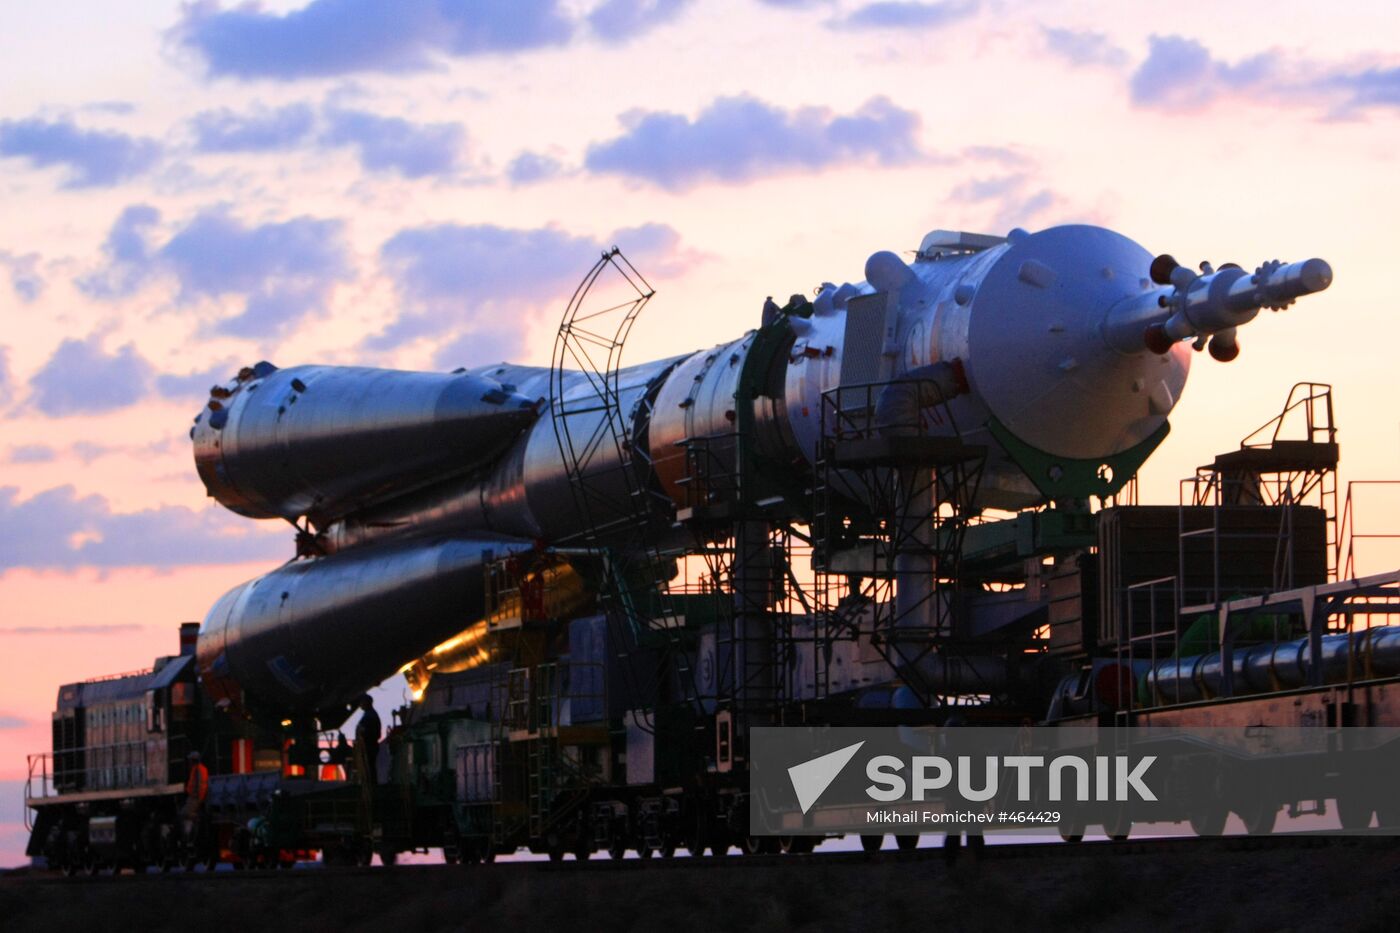 Soyuz-FG rocket with Soyuz TMA-16 spacecraft at Baikonur